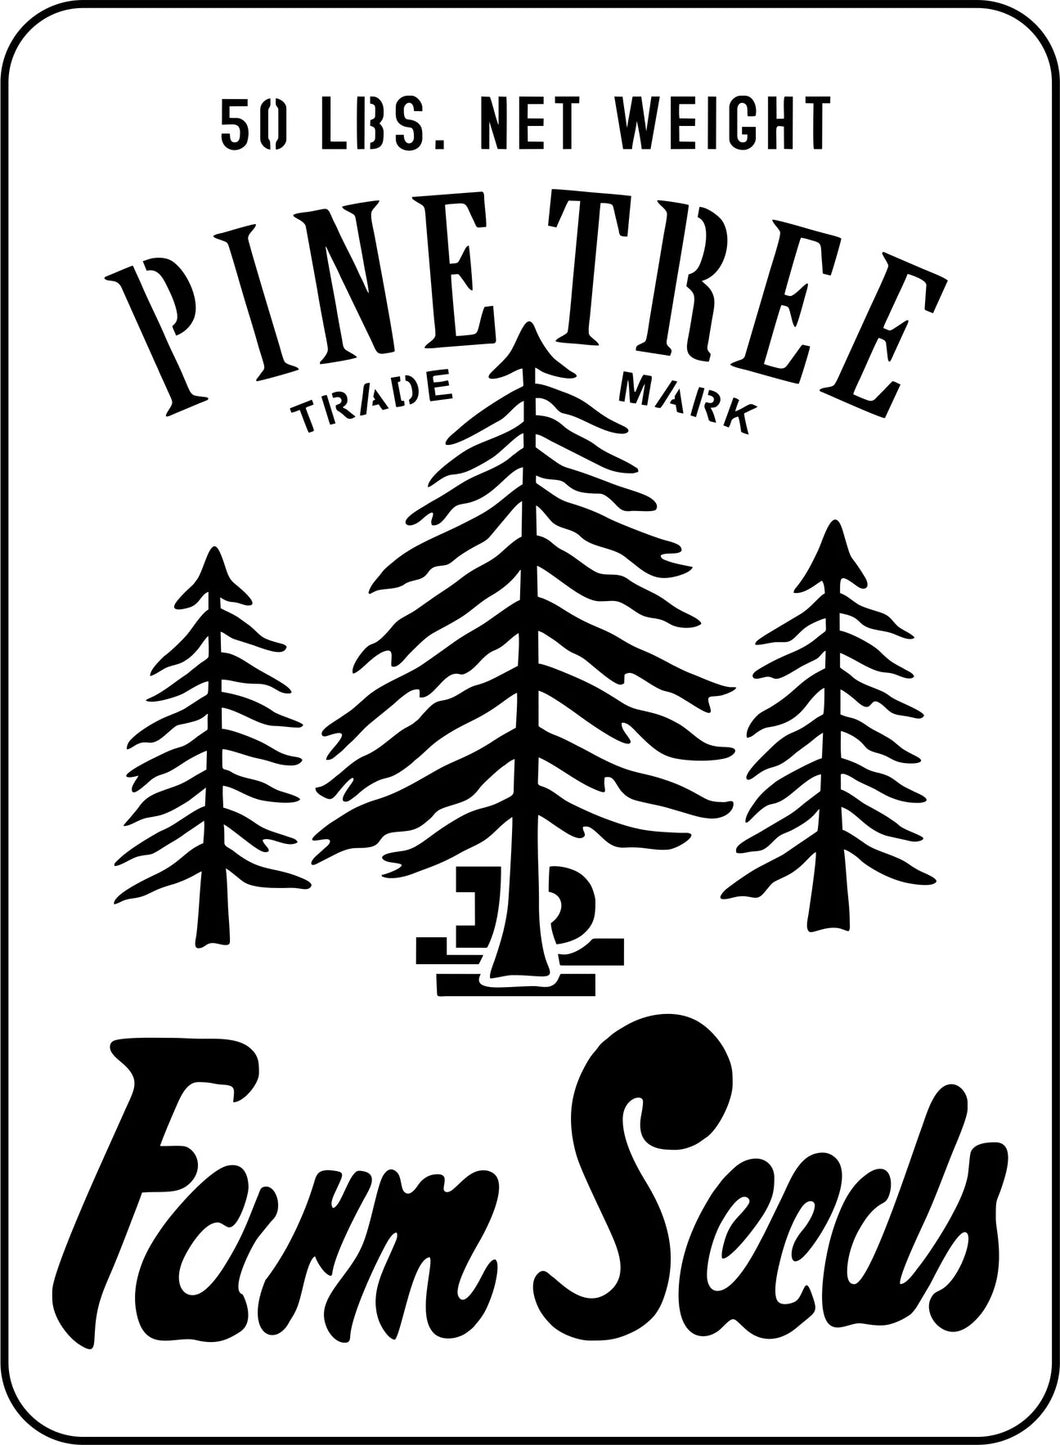 Pine Tree Farm Seeds